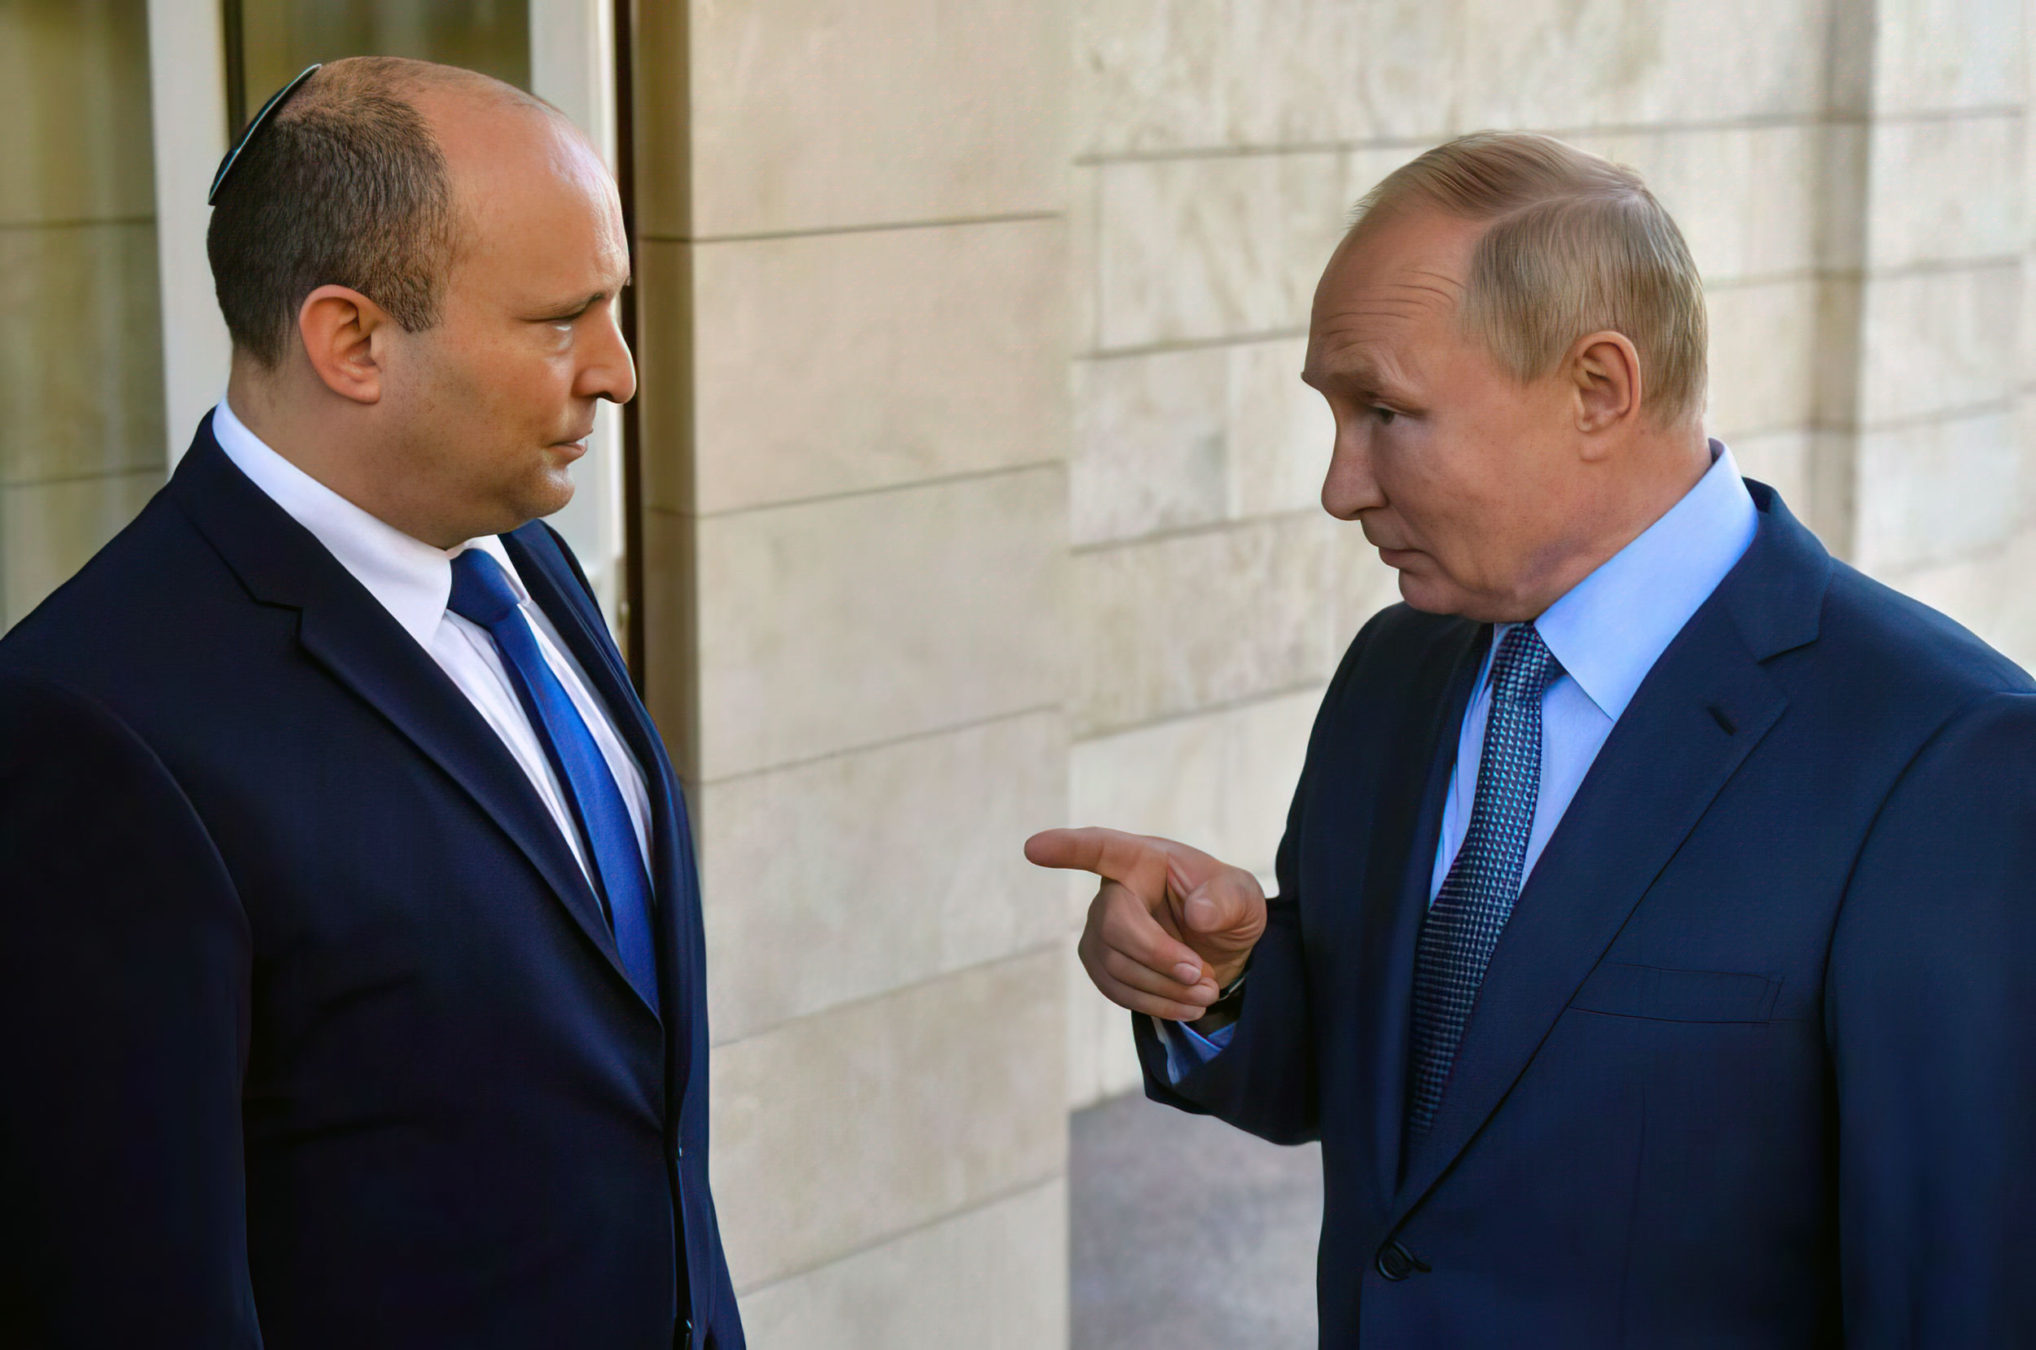 ¿Está Putin llevando a Bennett directamente a una trampa?